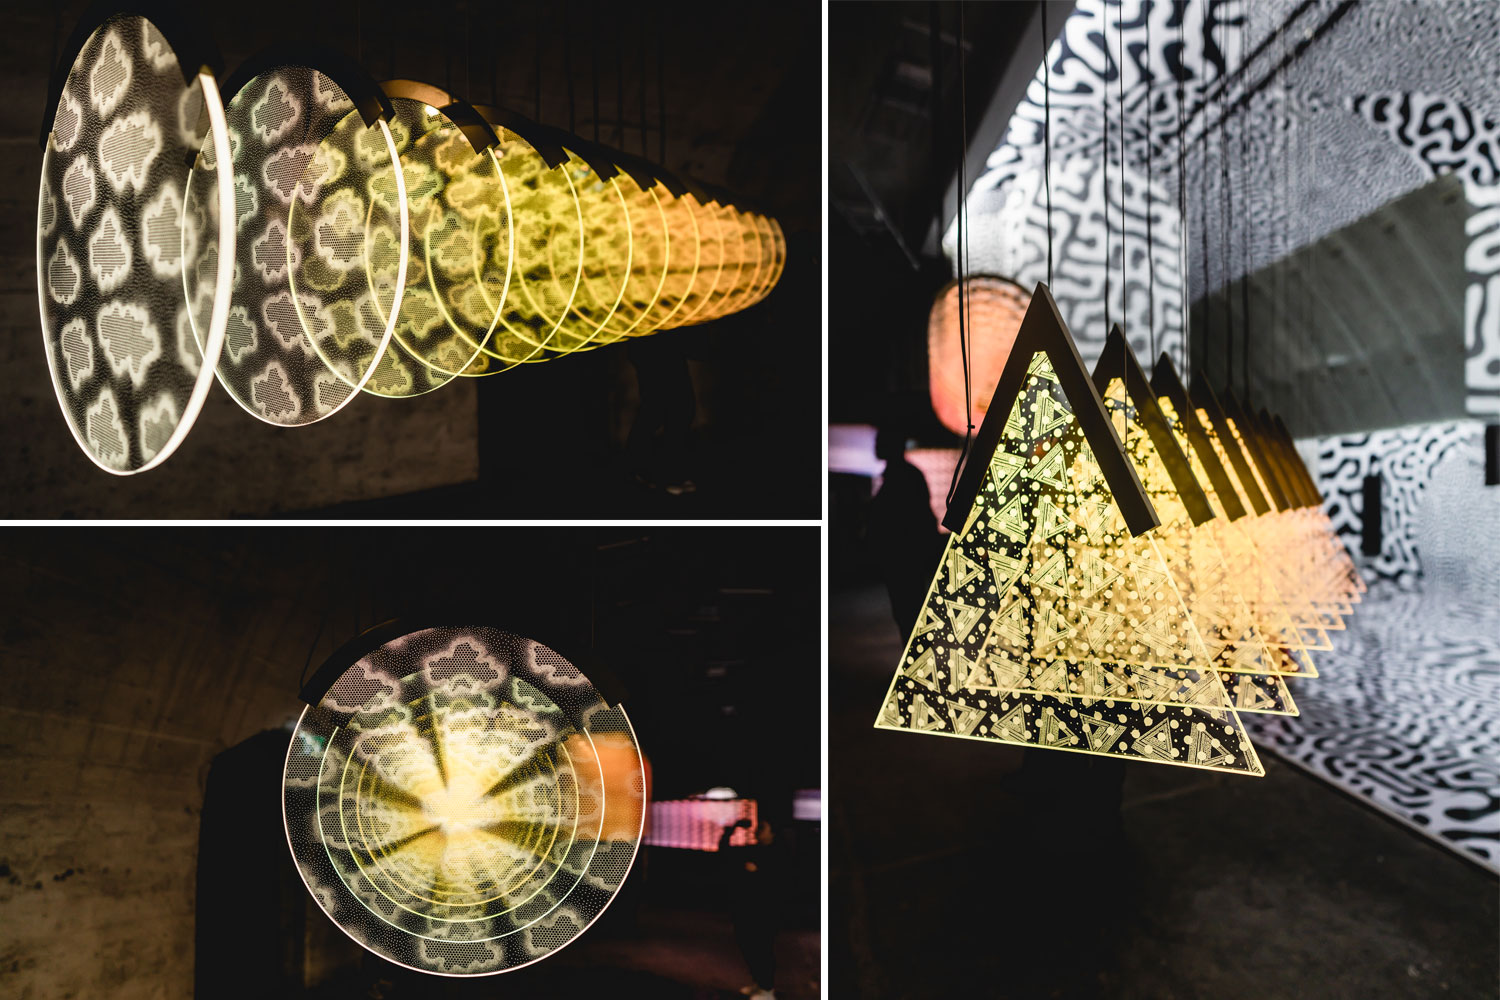 Best installations seen during milan design week 2019 - DAI NIPPON PRINTING